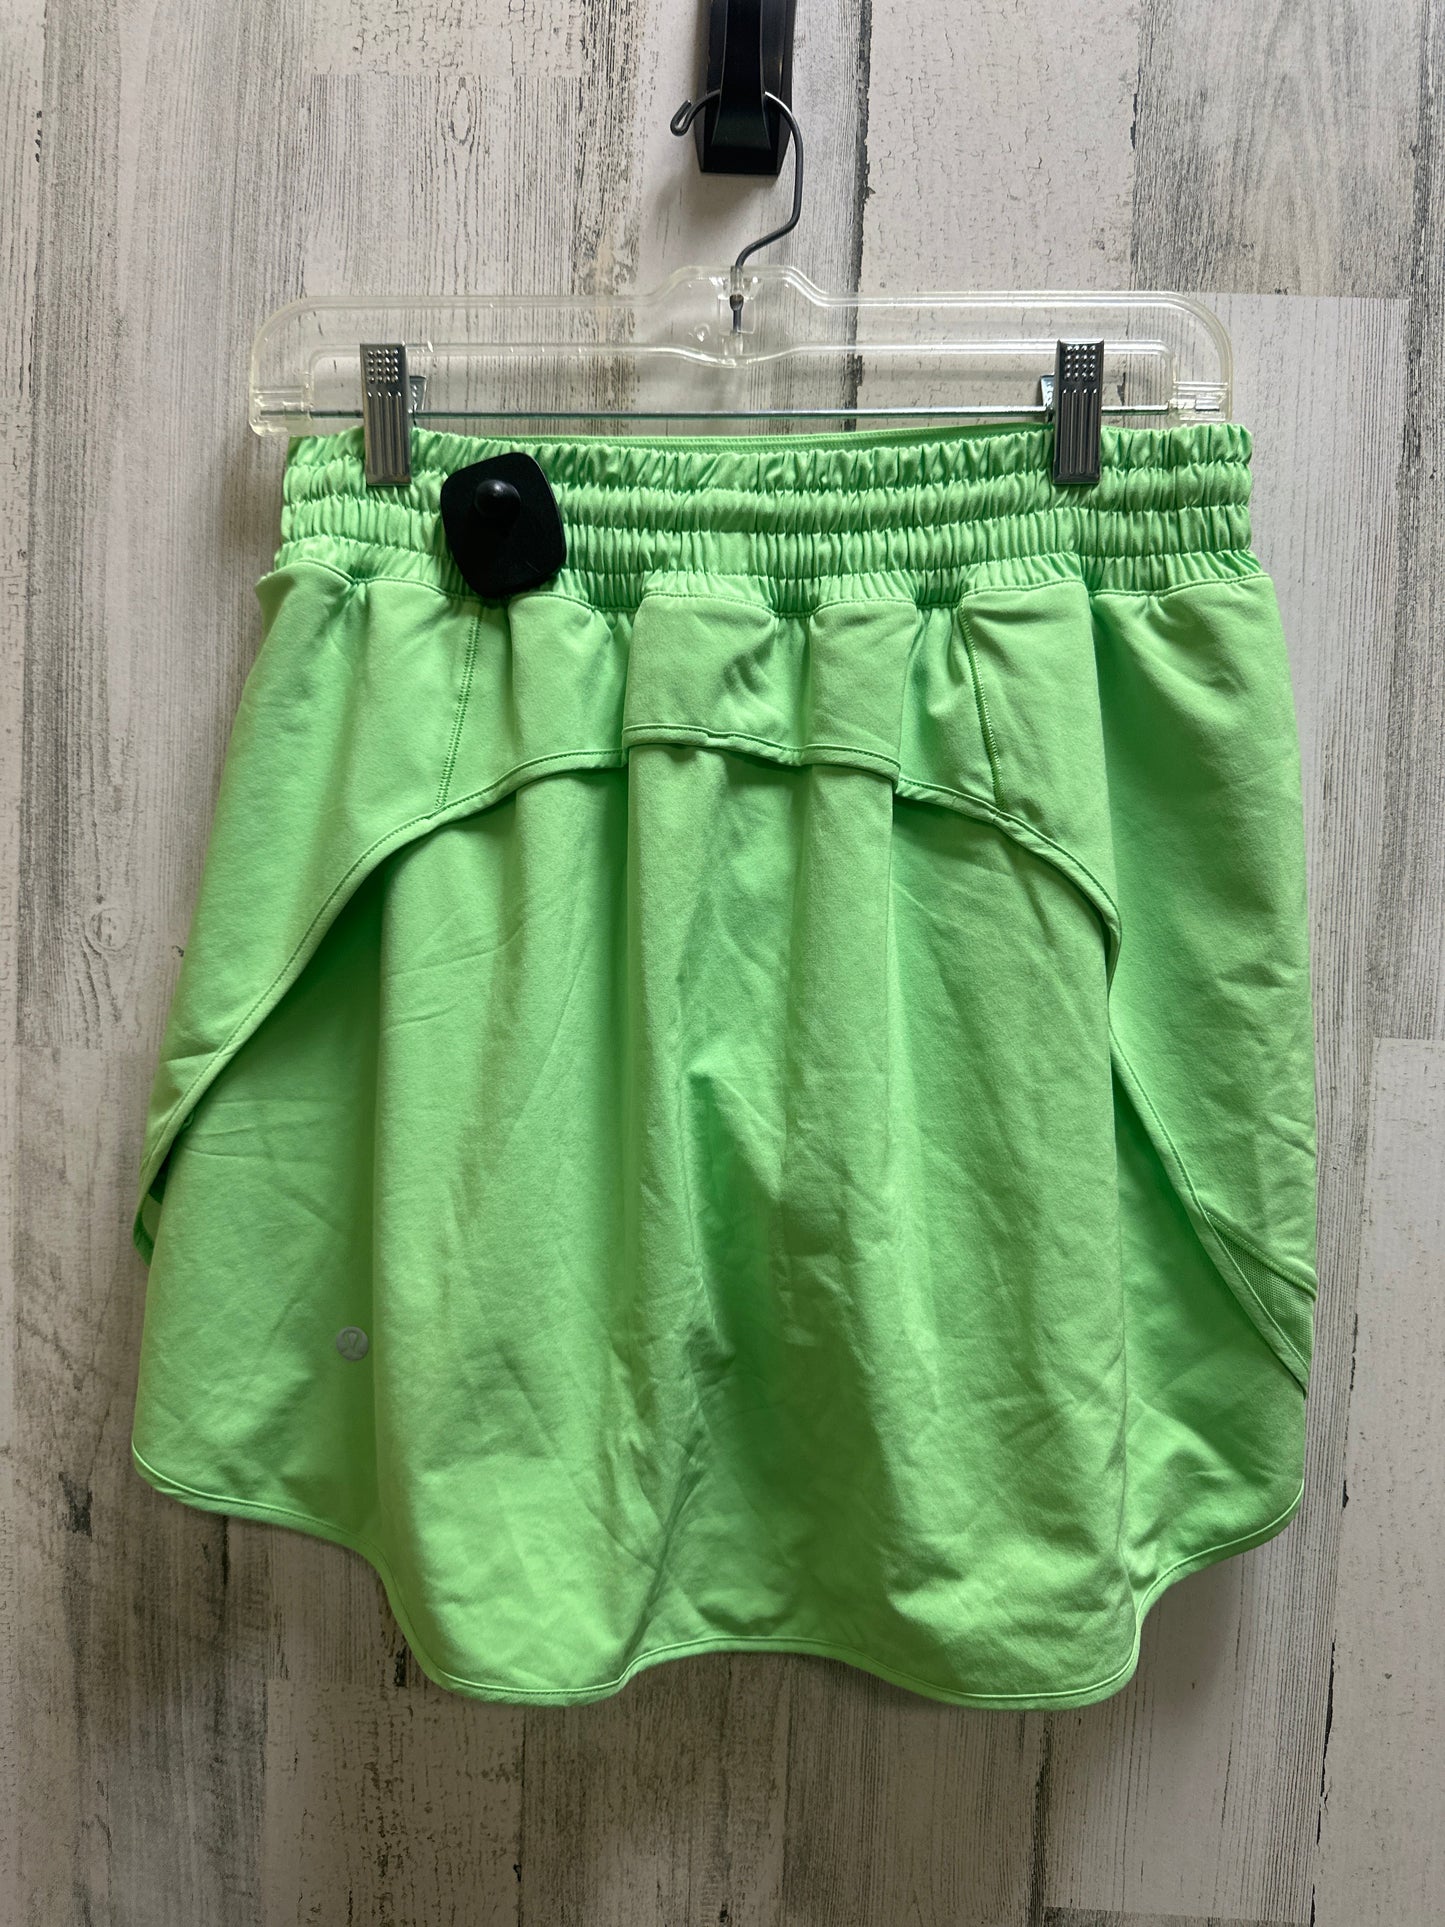 Green Athletic Skort Lululemon, Size 8